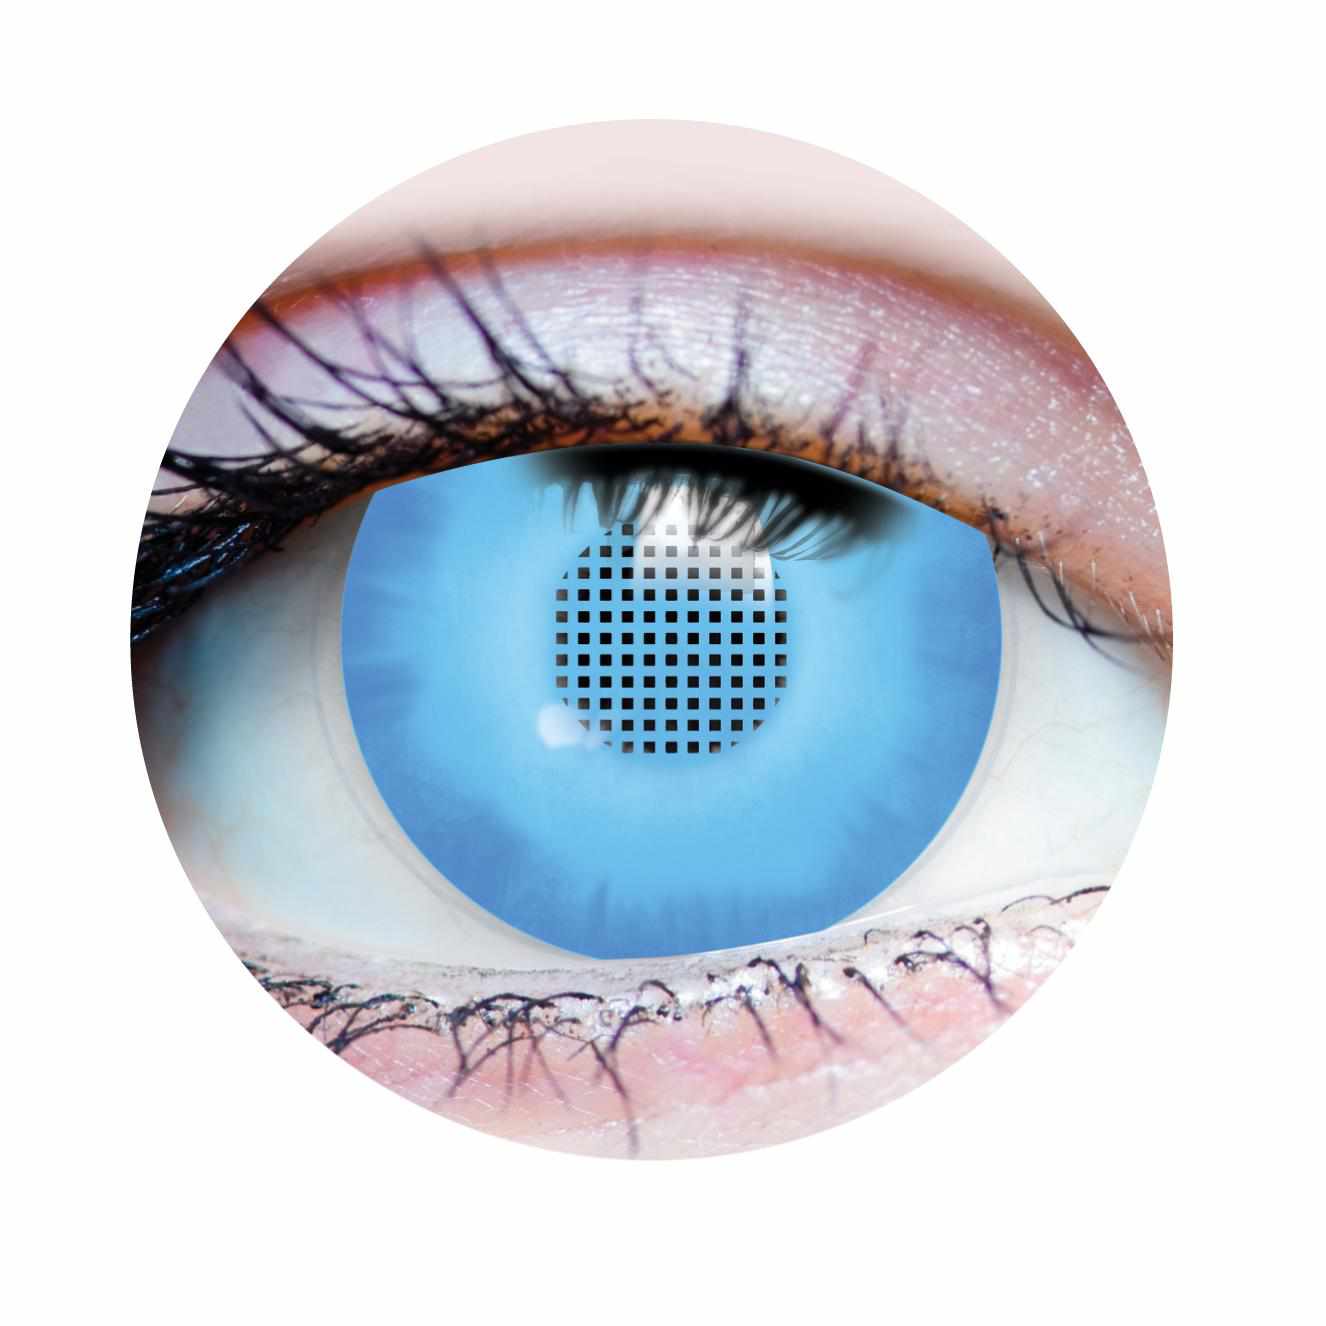 blue dragon eye contacts